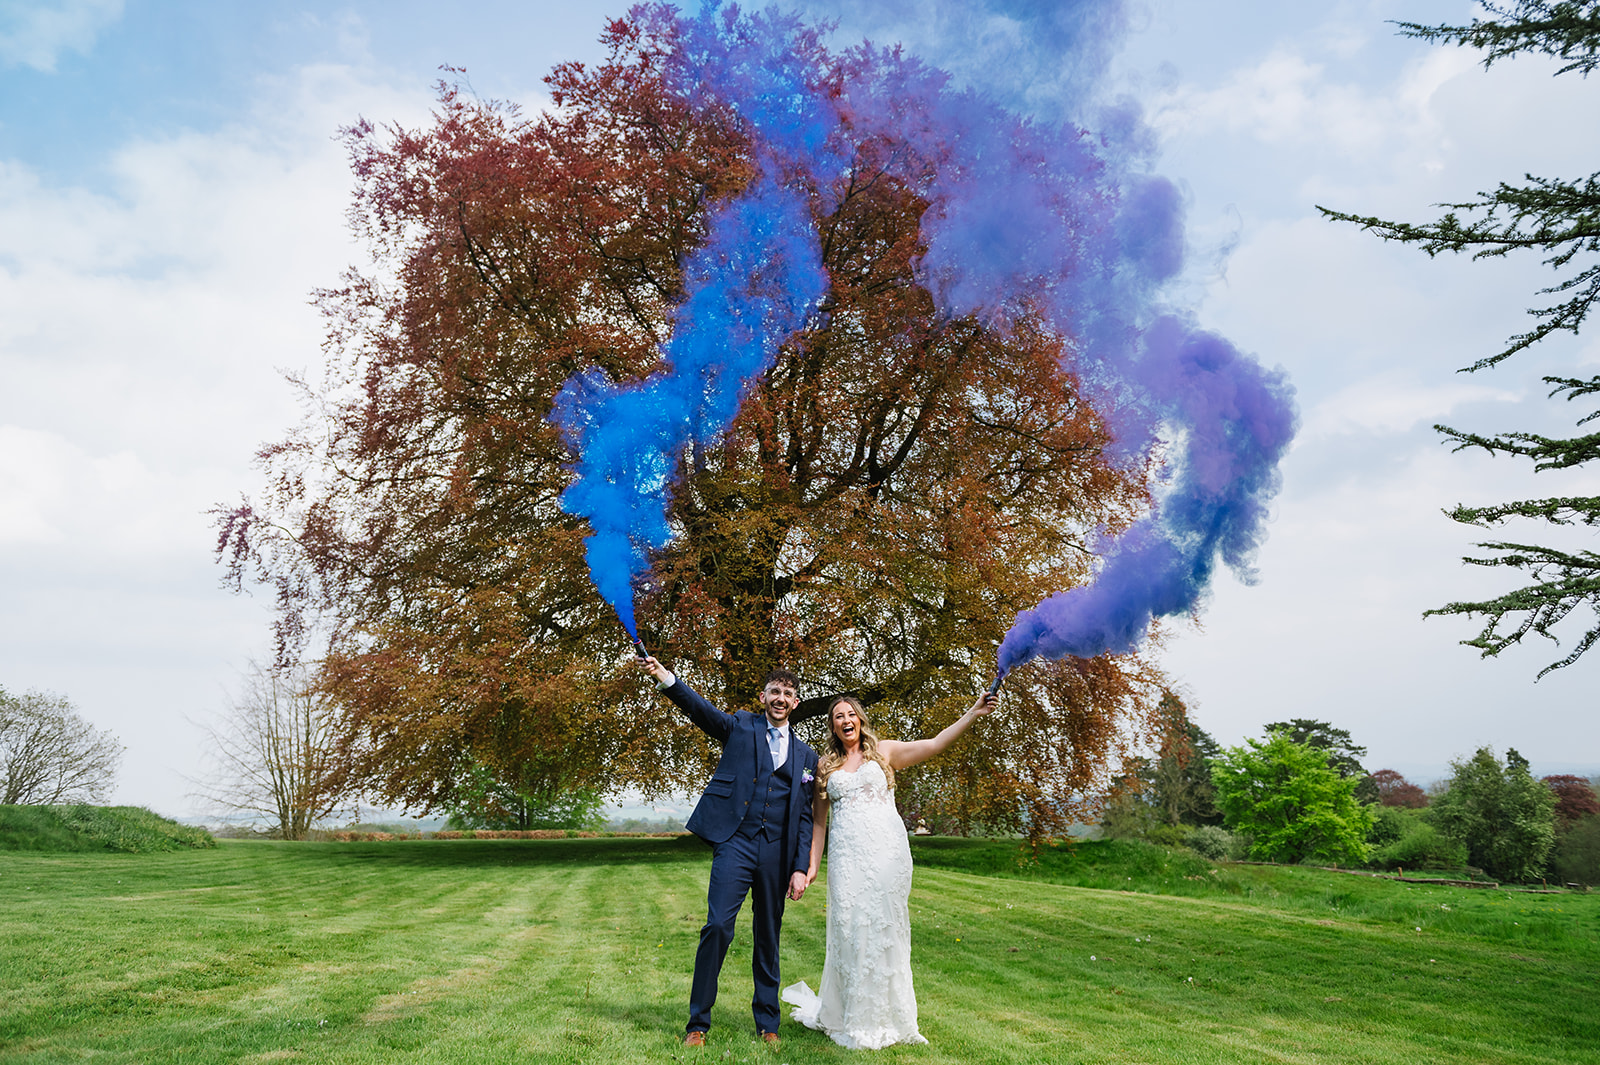 Jess and Kieran’s wedding at beautiful Bredenbury Court Barns was so much fun!